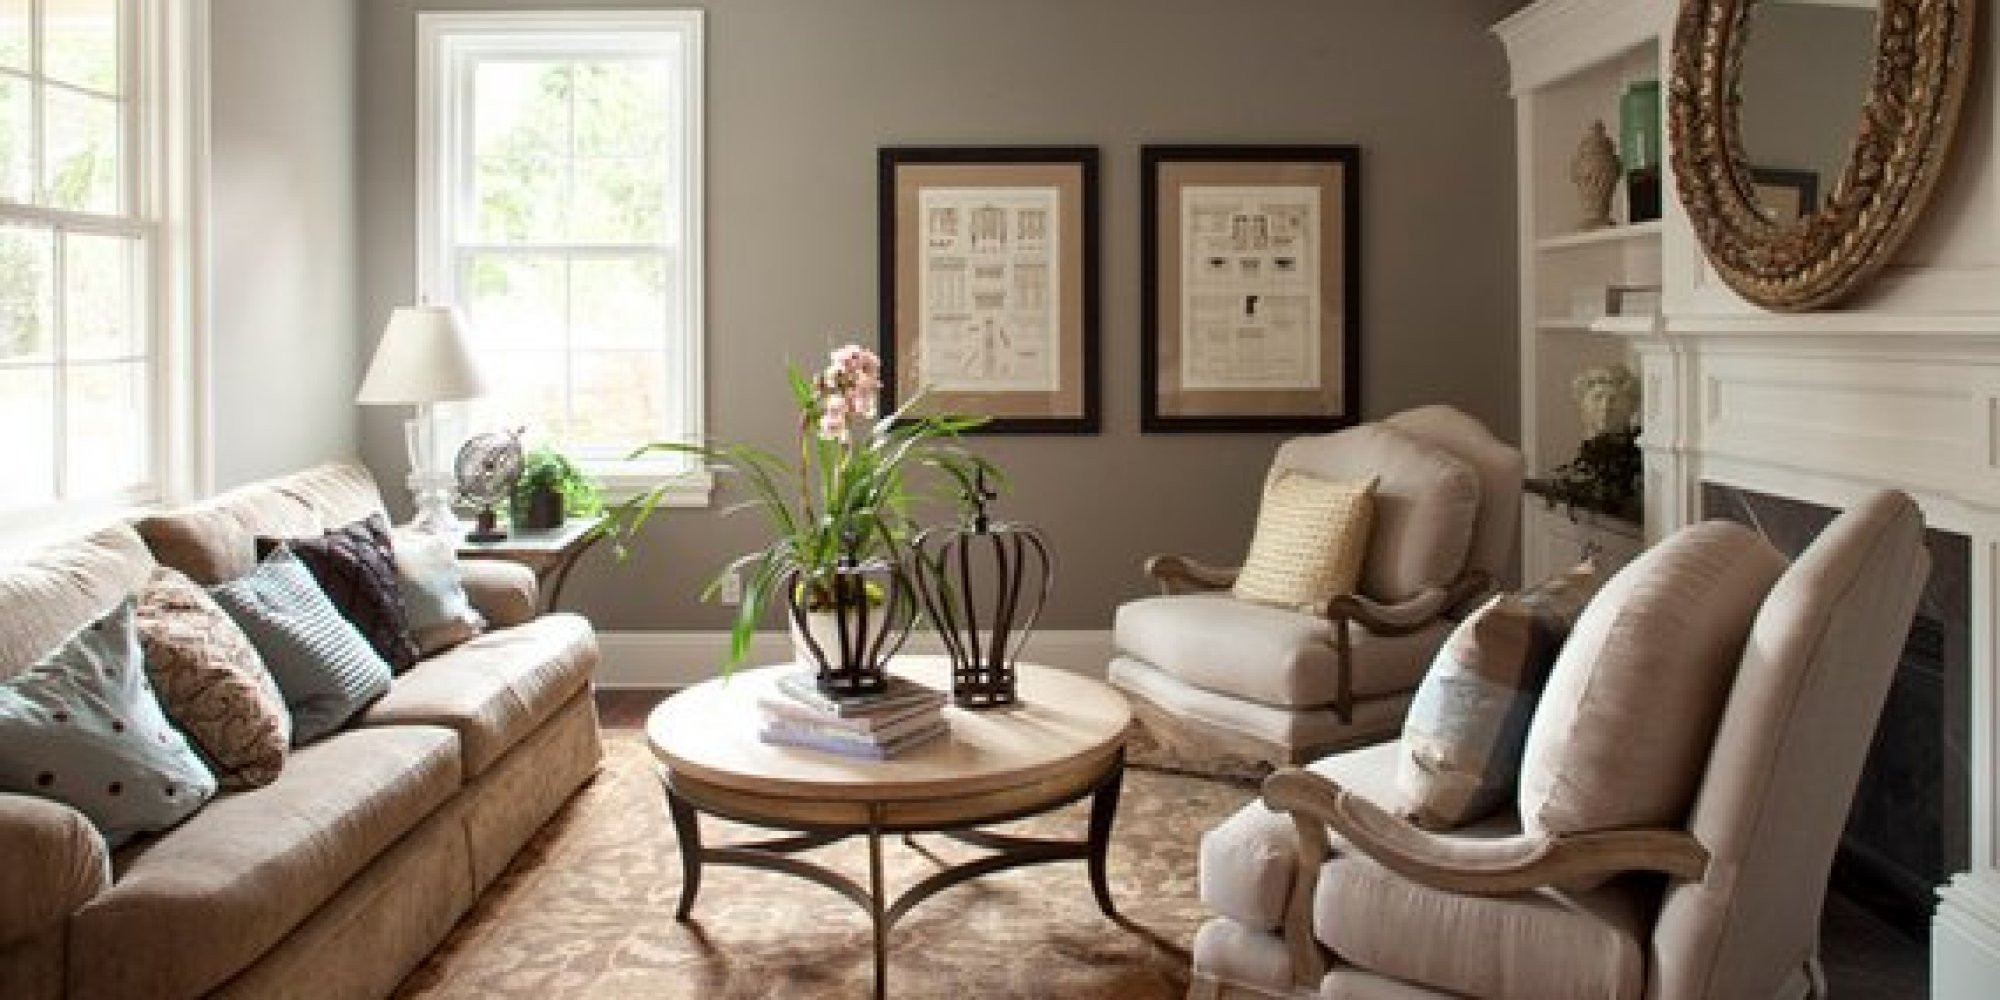 Top Living Room Paint Colors
 Best Neutral Living Room Paint Colors